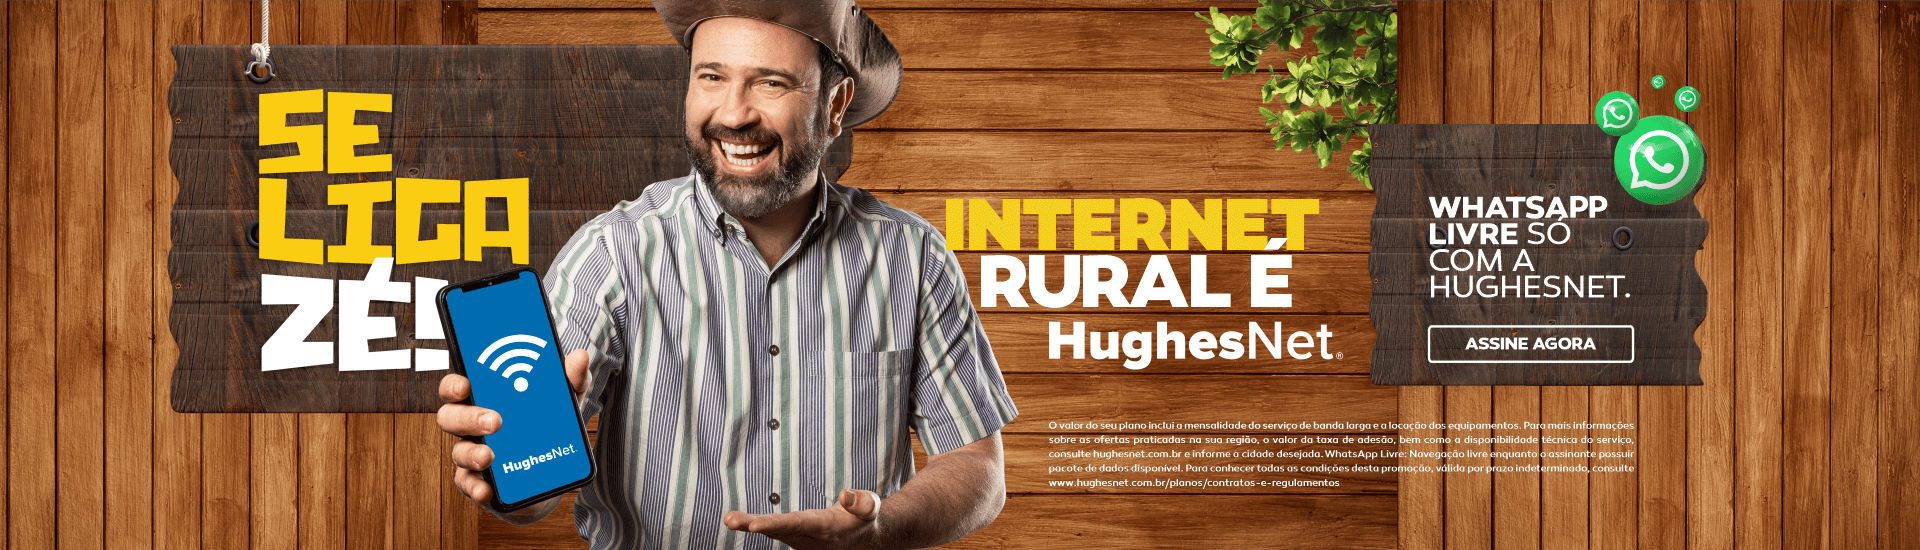 Internet Rural Via Satélite em Urupês